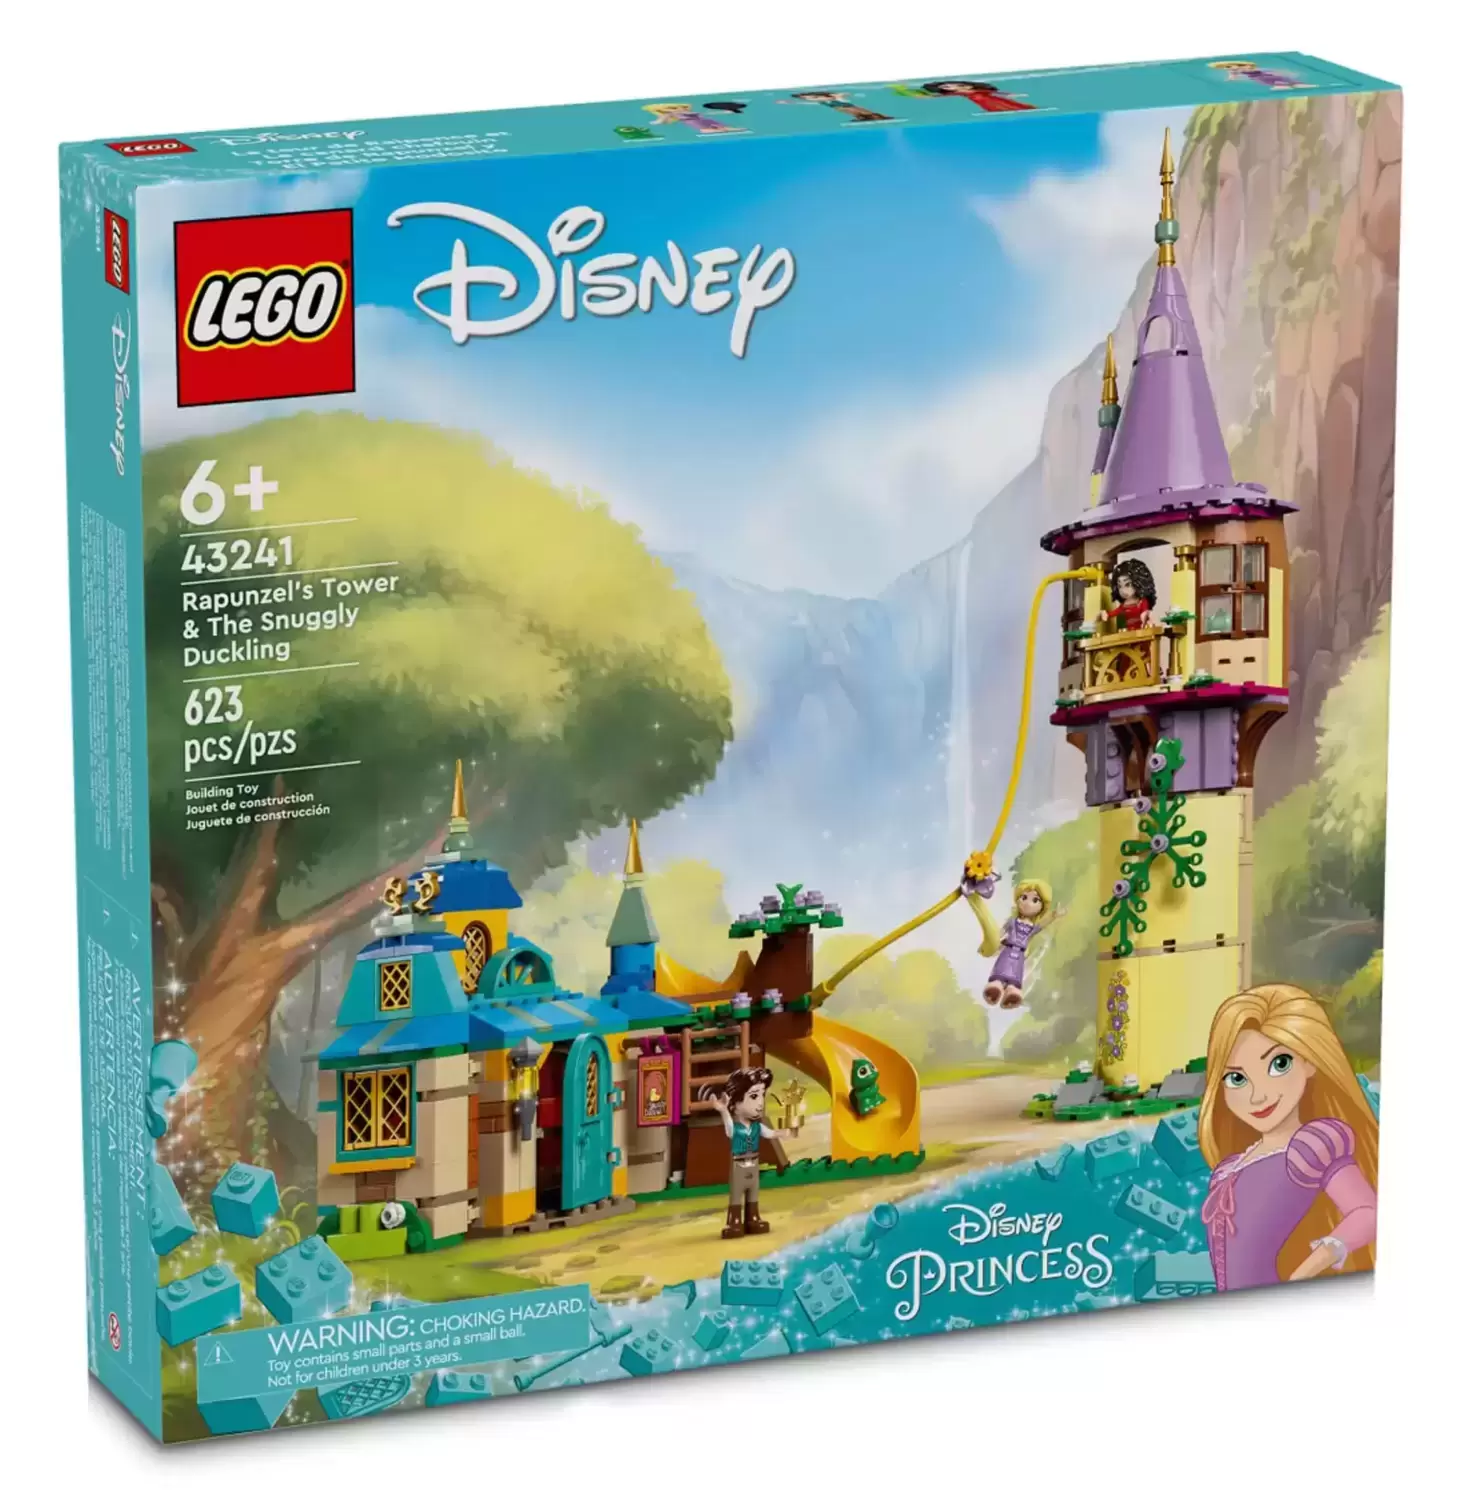 Rapunzel's Tower & The Snuggly Duckling - LEGO Disney set 43241